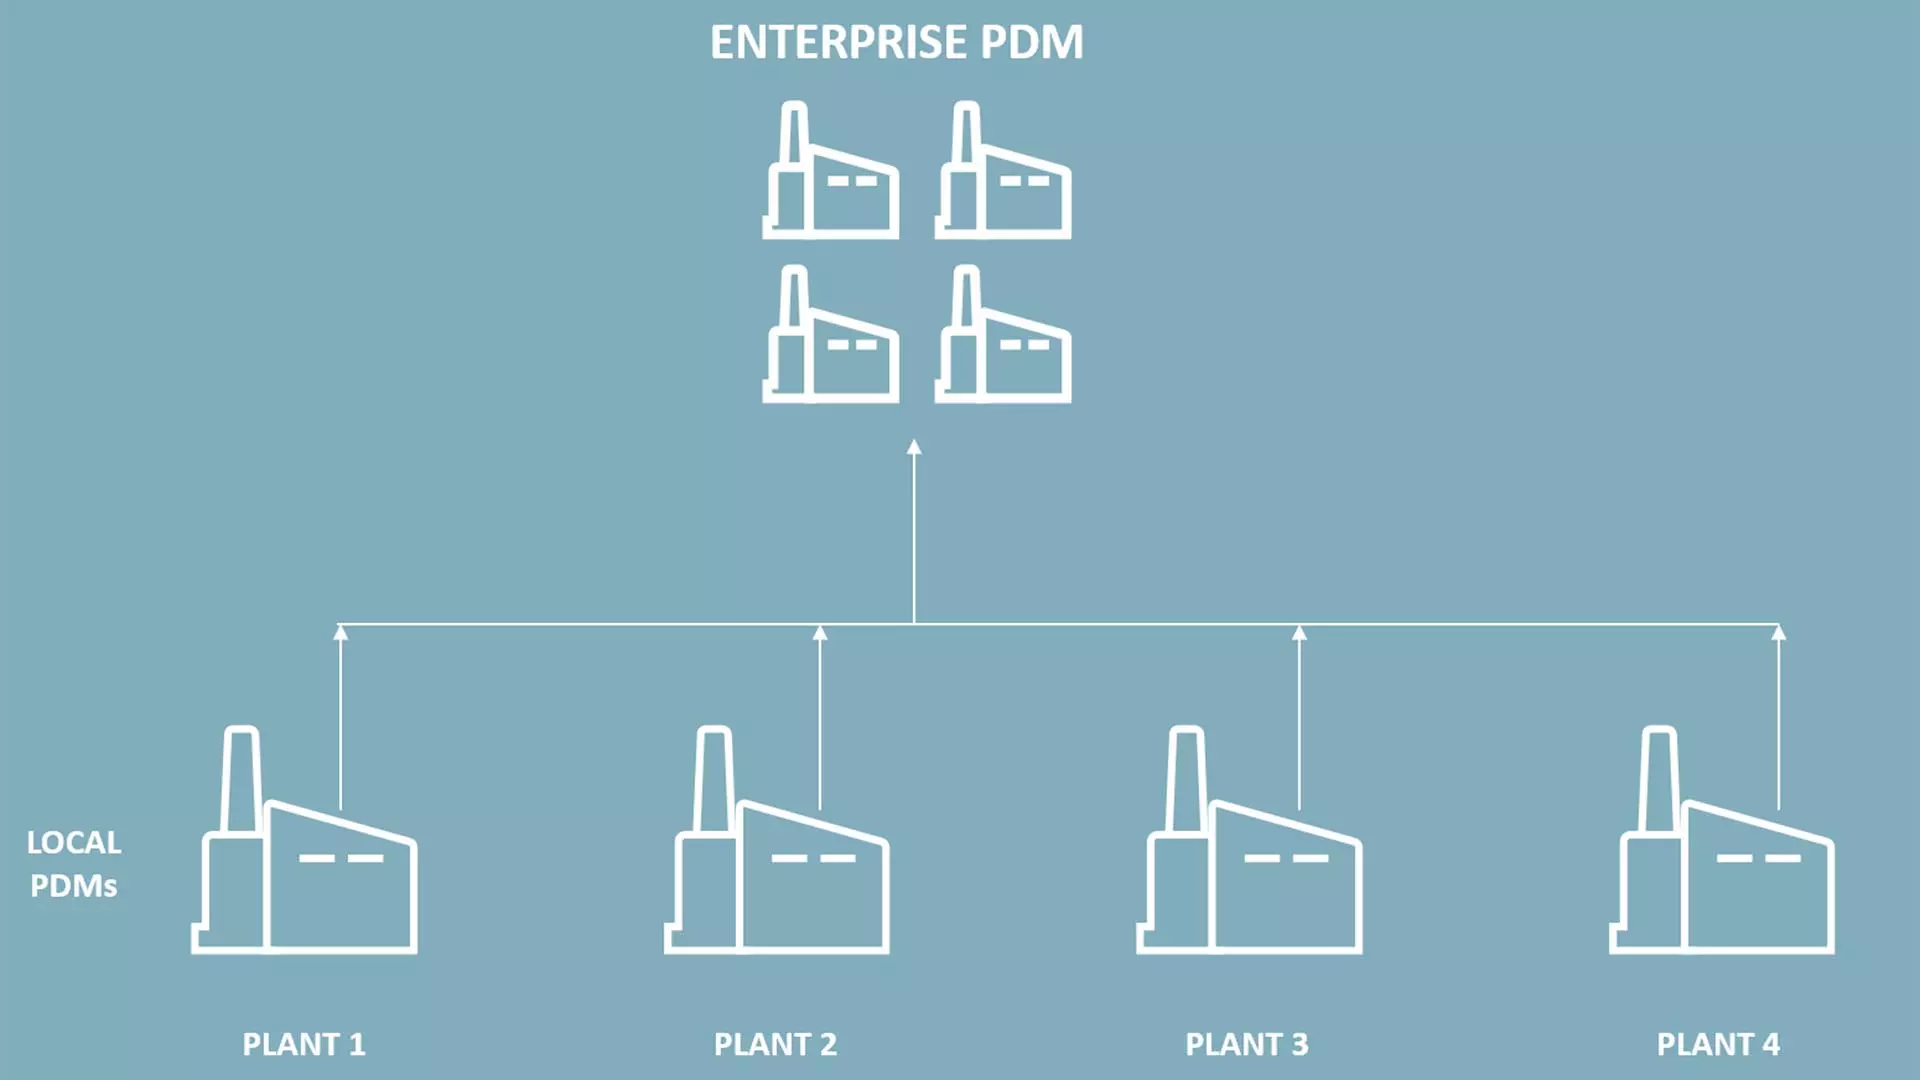 Enterprise PDM